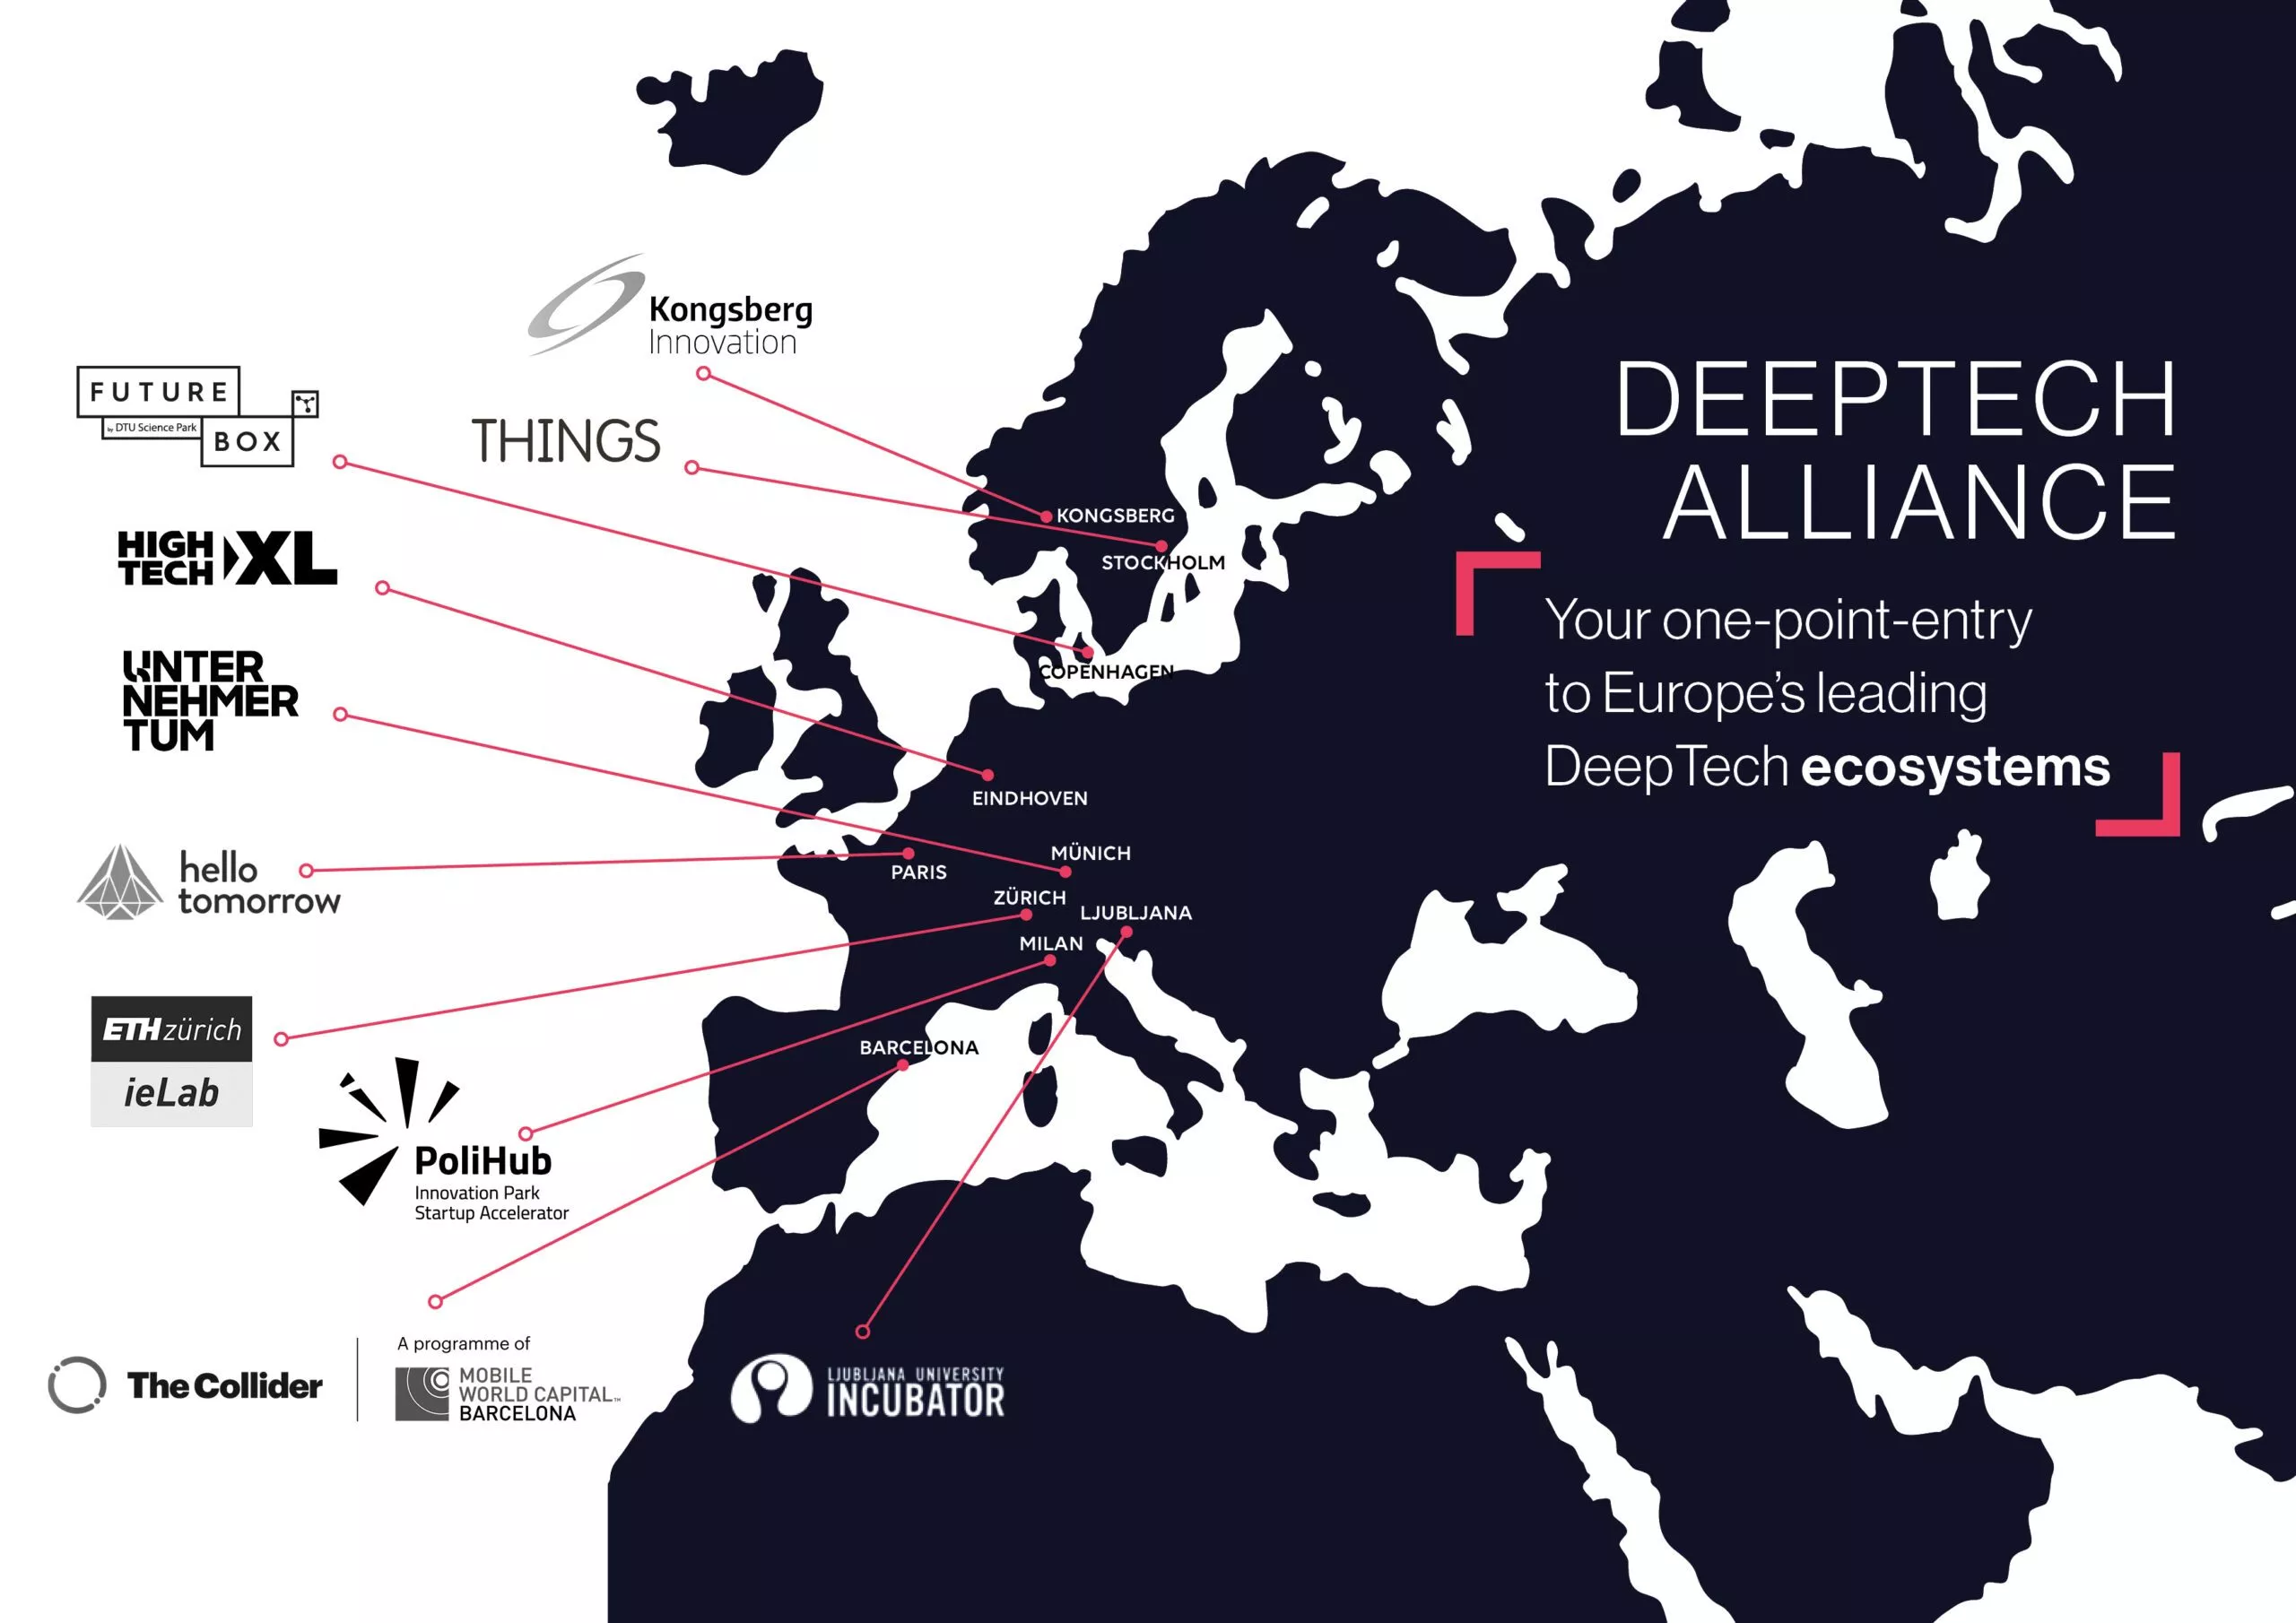 DeepTech Alliance is a collaboration